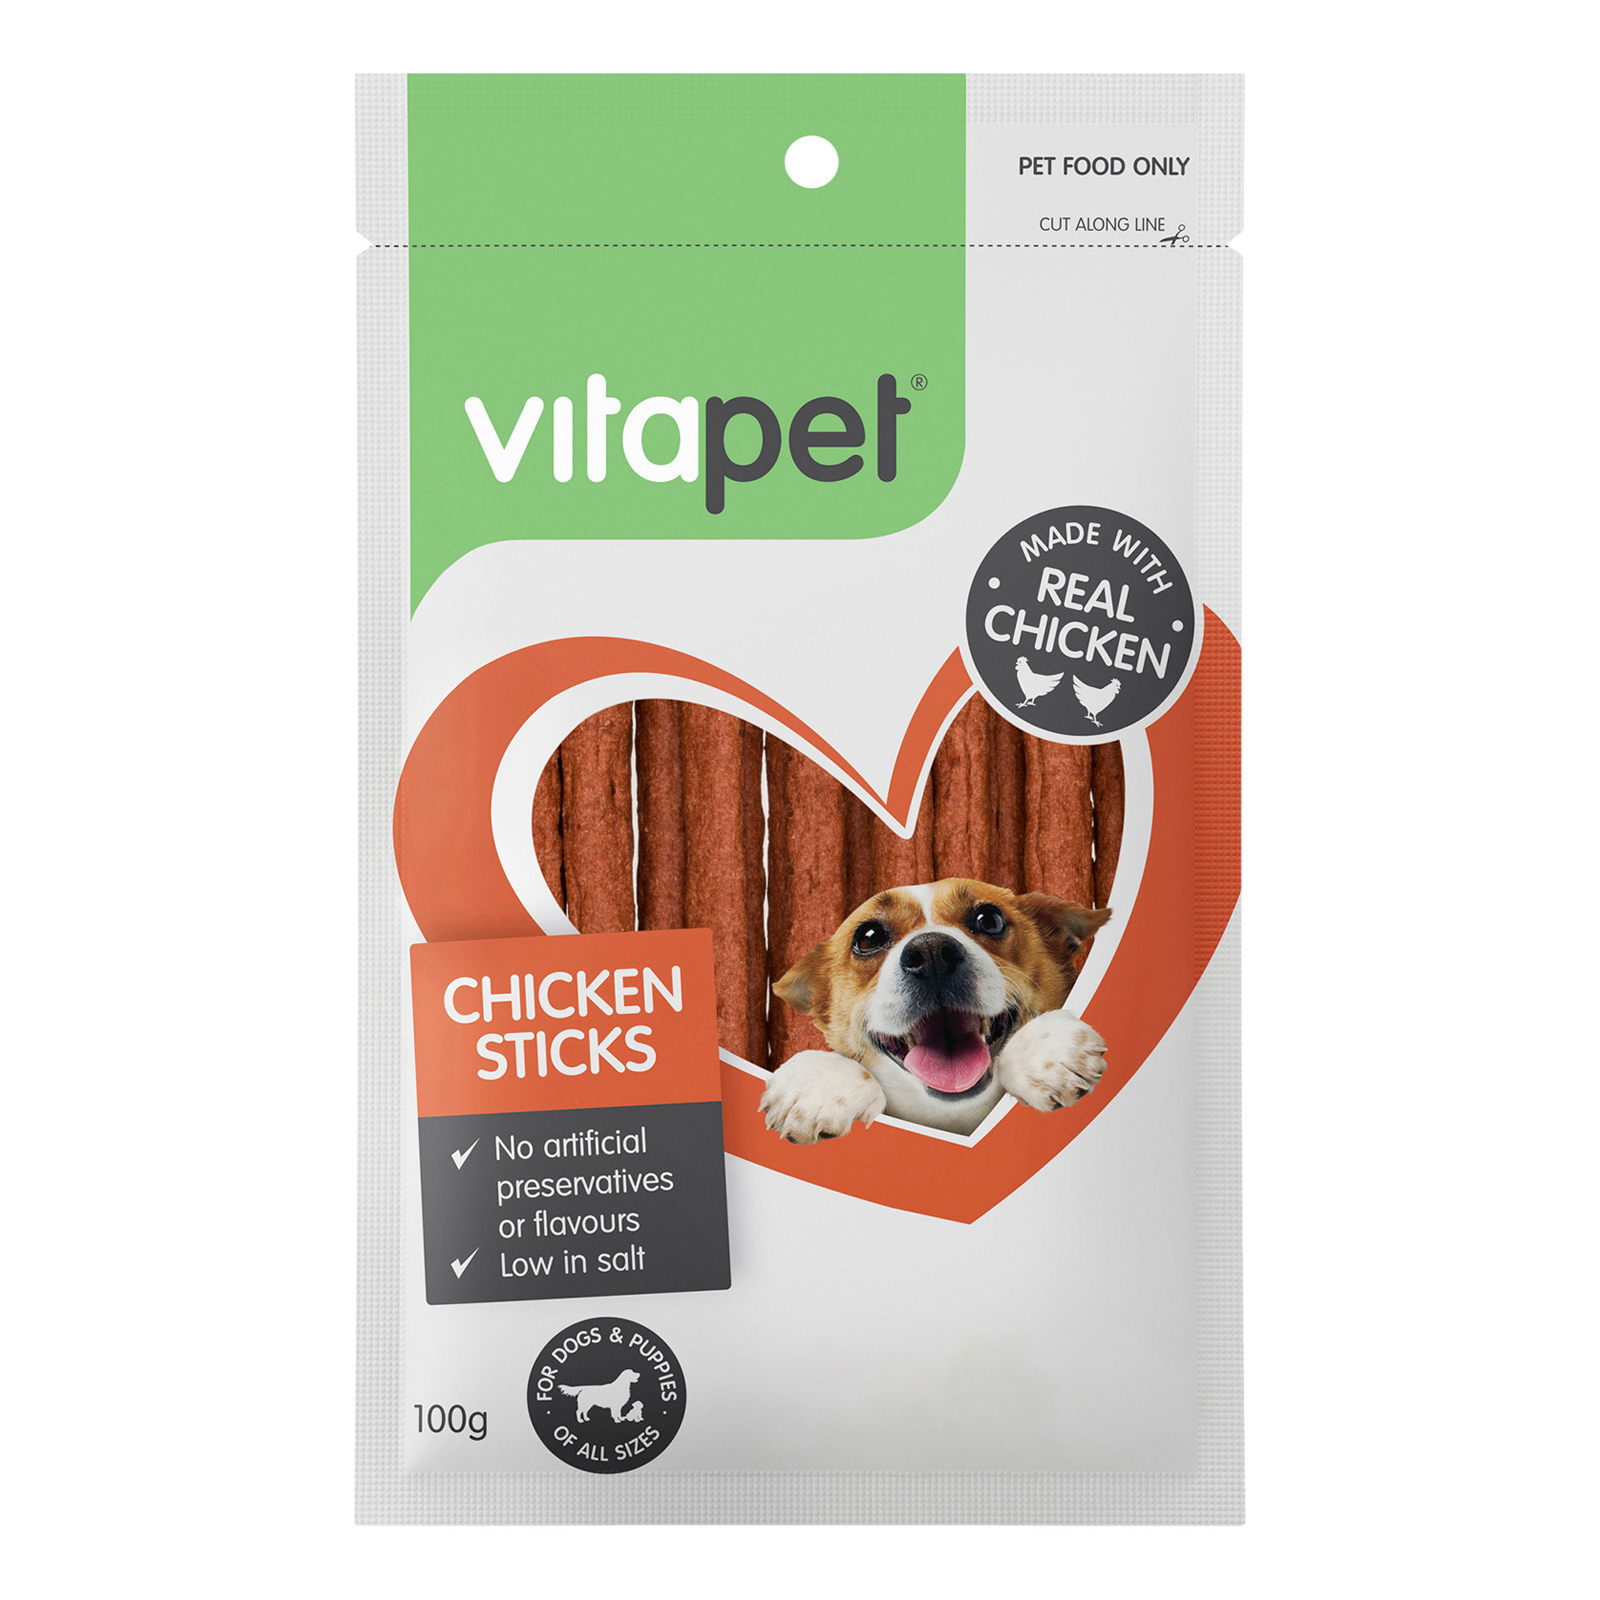 Vitapet Chicken Sticks Dog Treats for Dogs